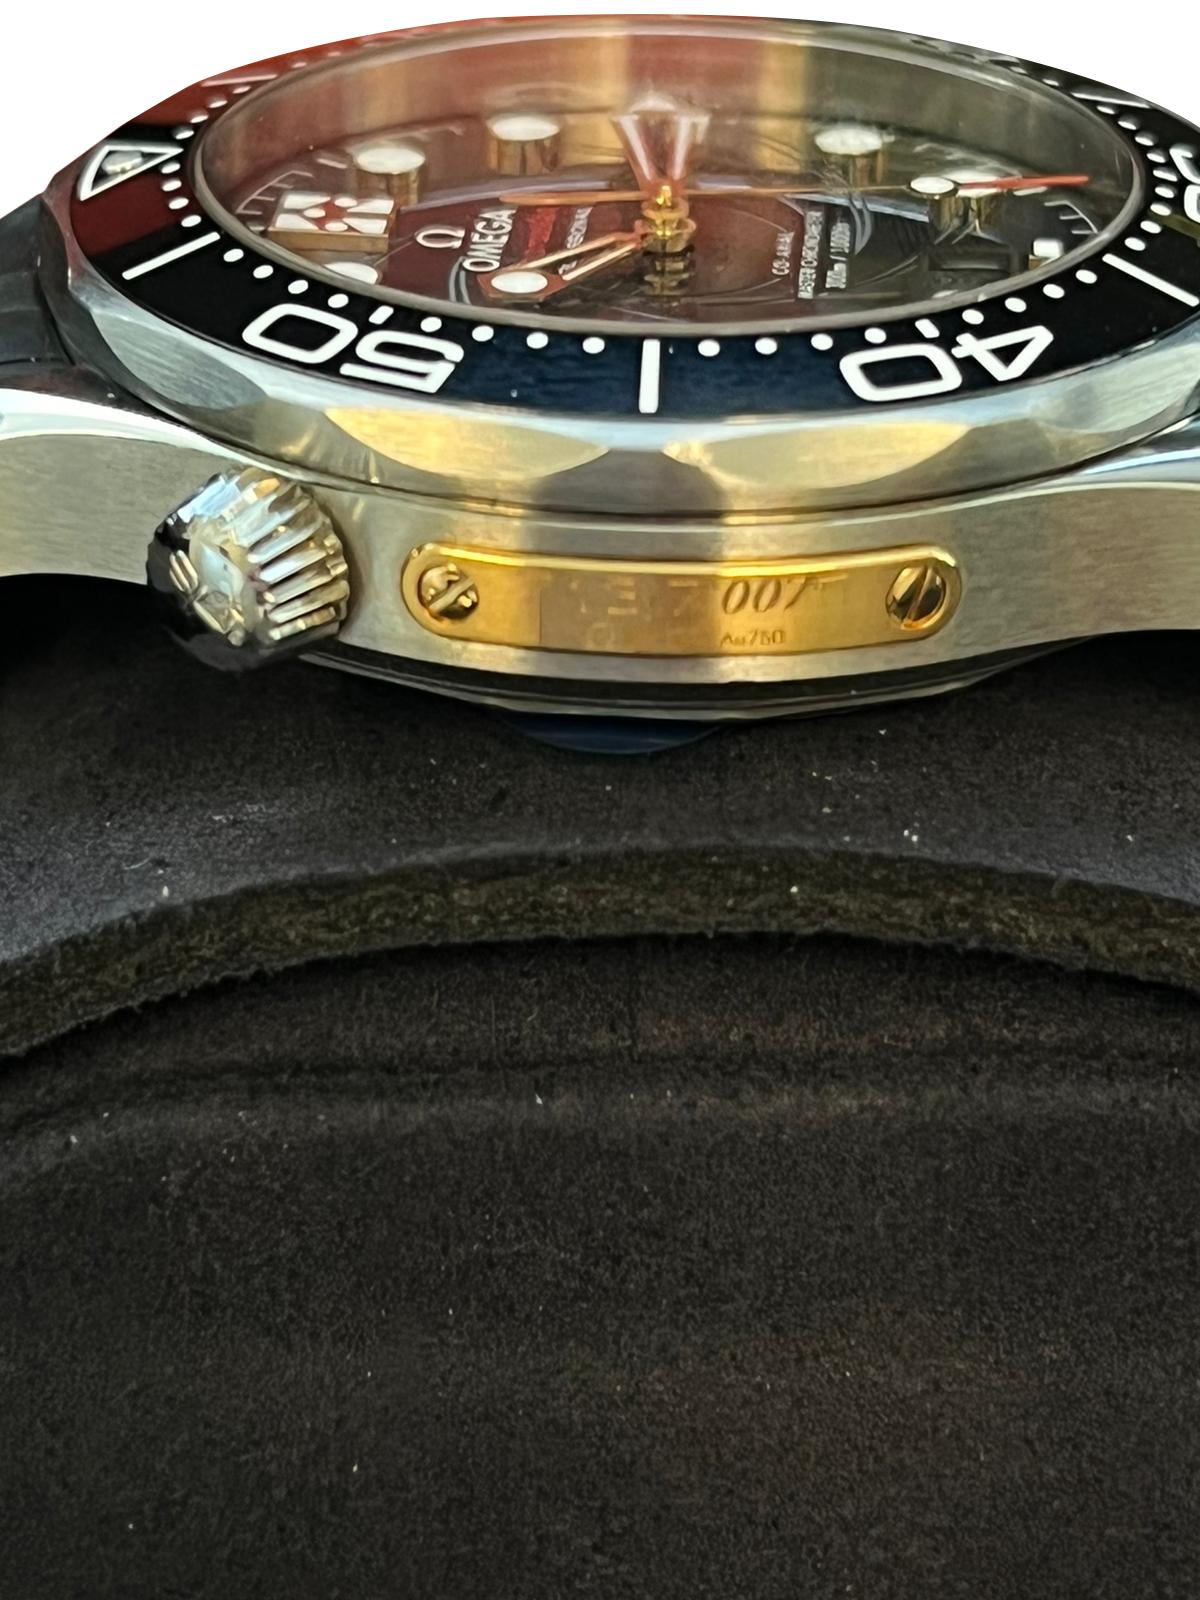 Omega Seamaster Diver 300 M James Bond Limited Edition Watch 210.22.42.20.01.004 12